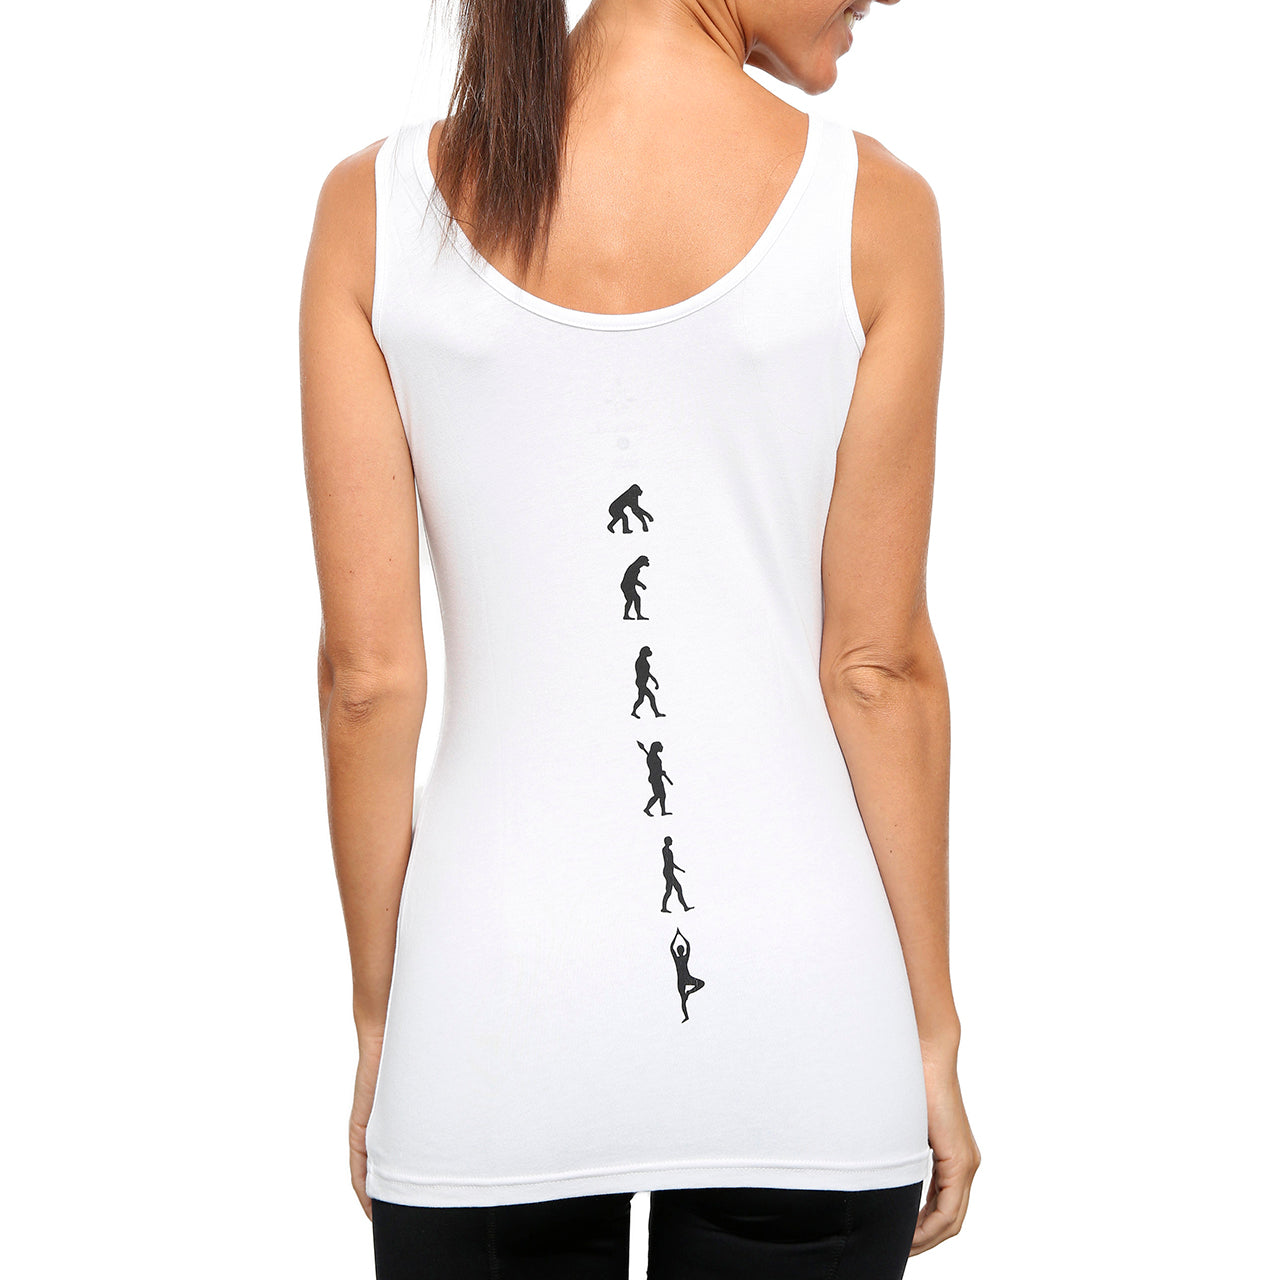 Womens Yoga Tank Tops & Sleeveless Shirts.